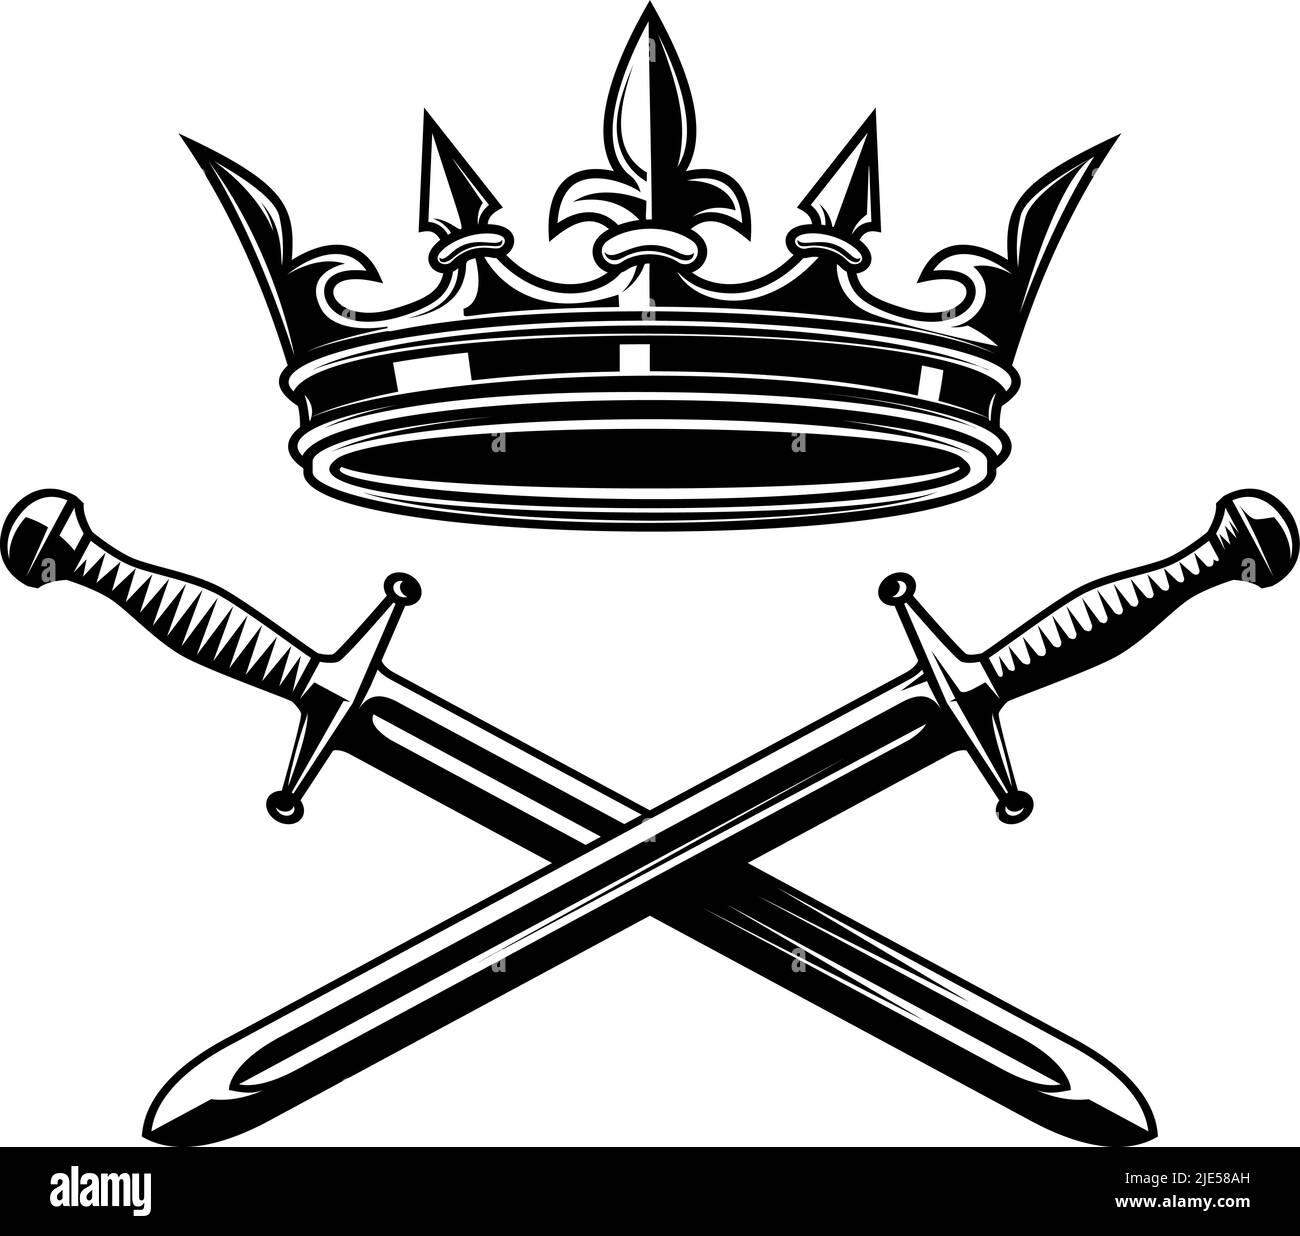 Illustration of king crown and crossed swords in monochrome style. Design element for logo, emblem, sign, poster, t shirt. Vector illustration Stock Vector